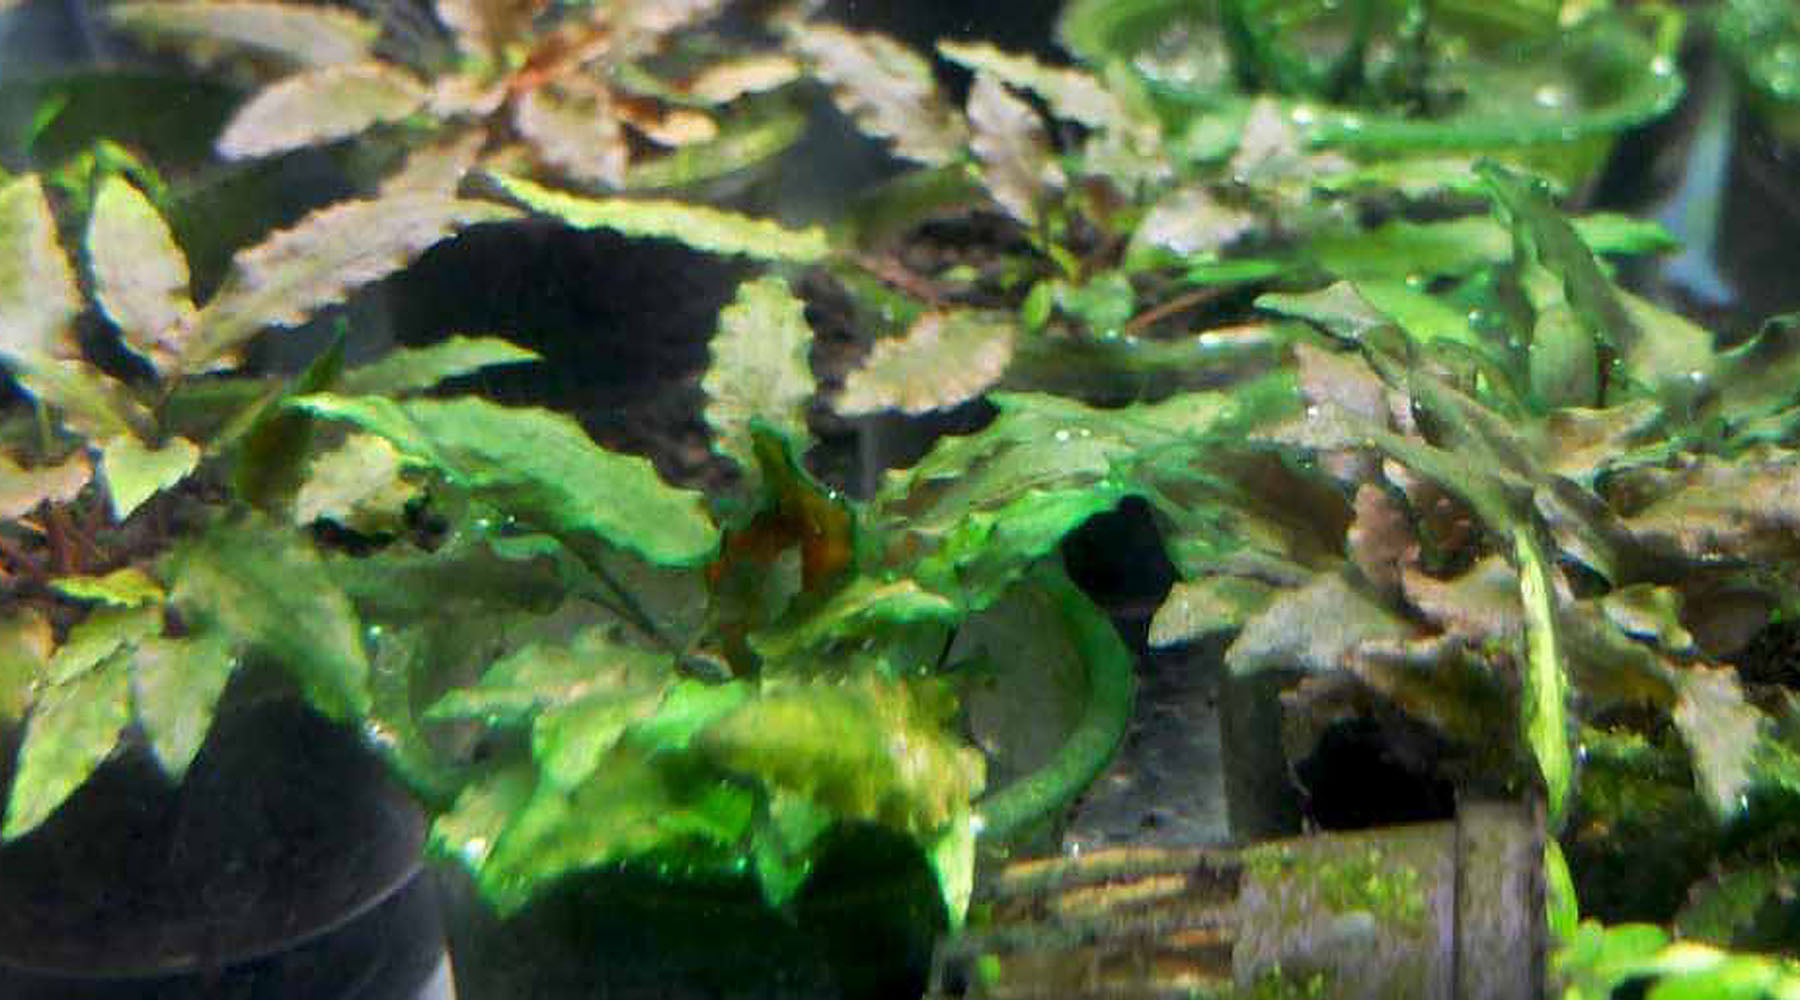 How to control cyanobacteria (Blue-green algae) in an aquarium